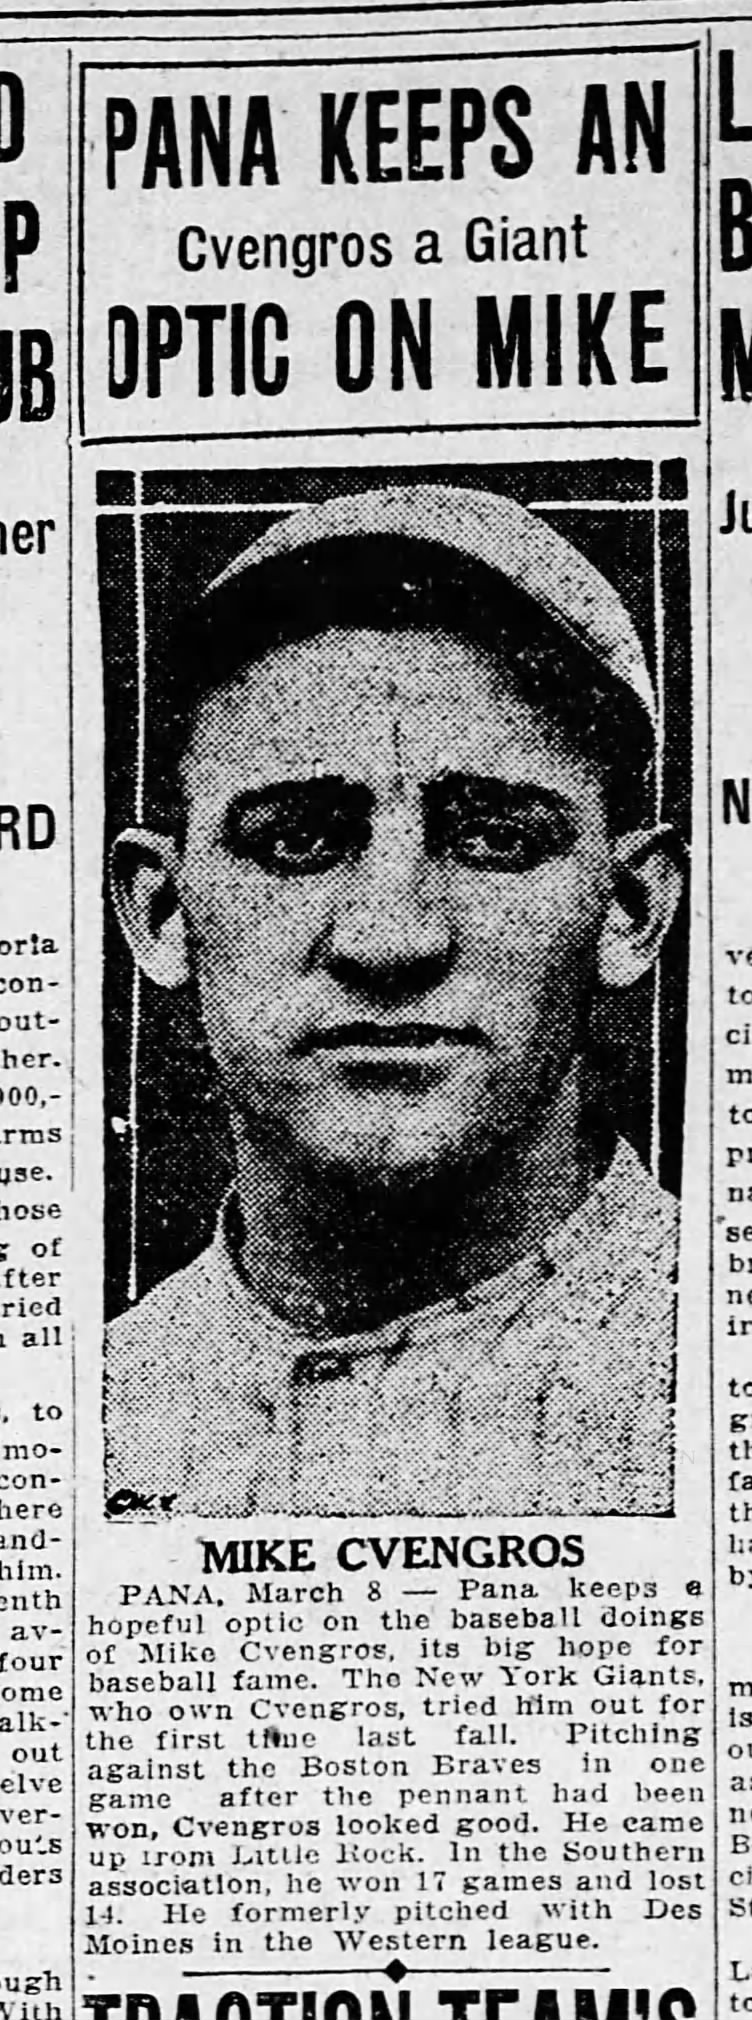 Decatur Herald 09 Mar 1923 page 16 Mike Cvengros baseball